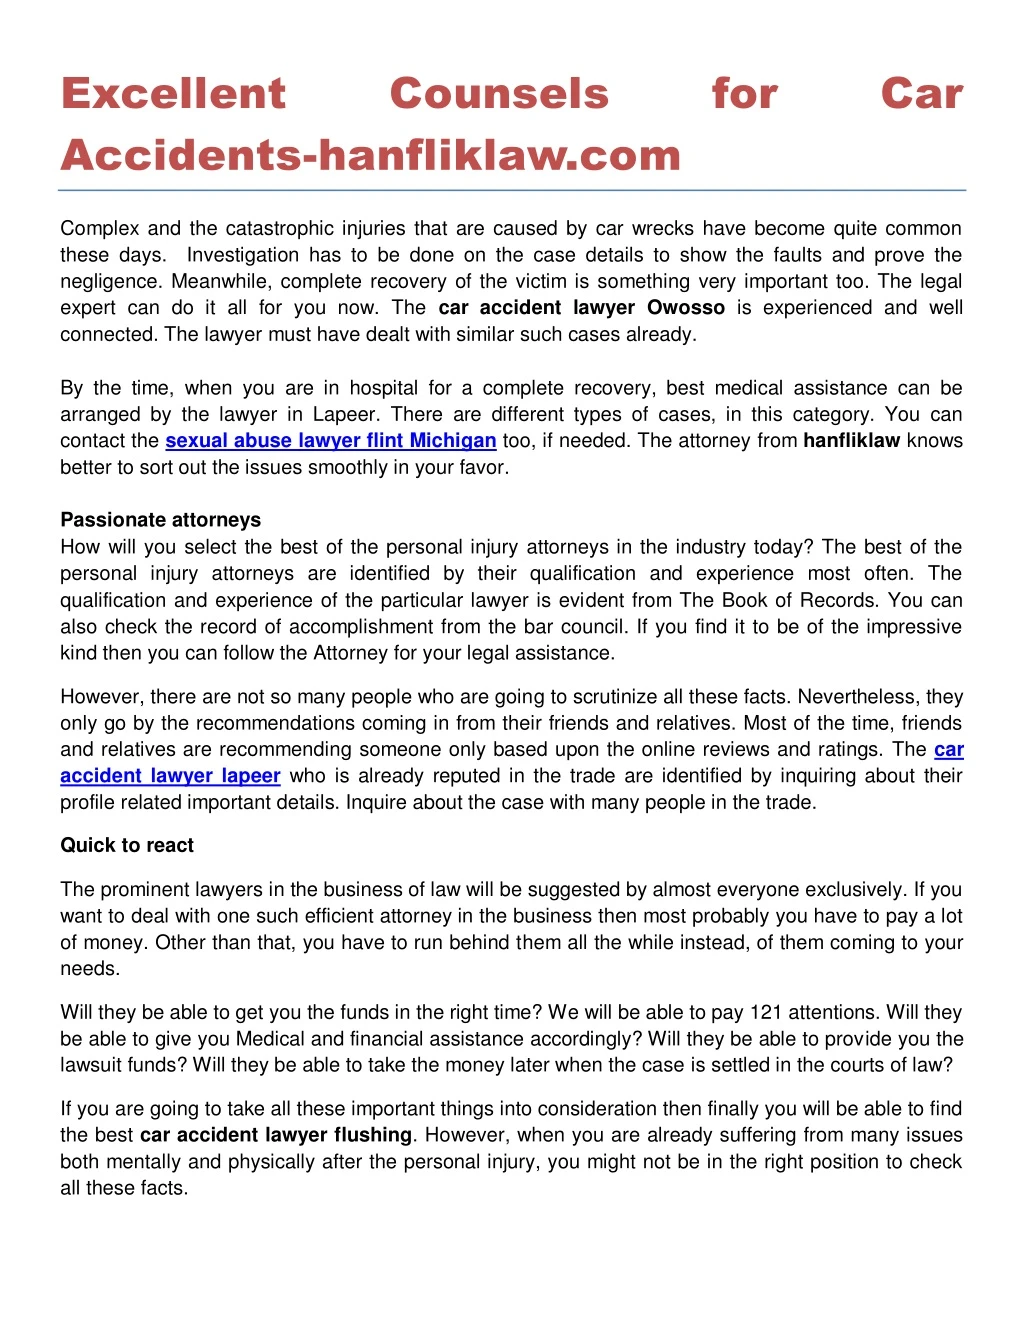 excellent accidents hanfliklaw com